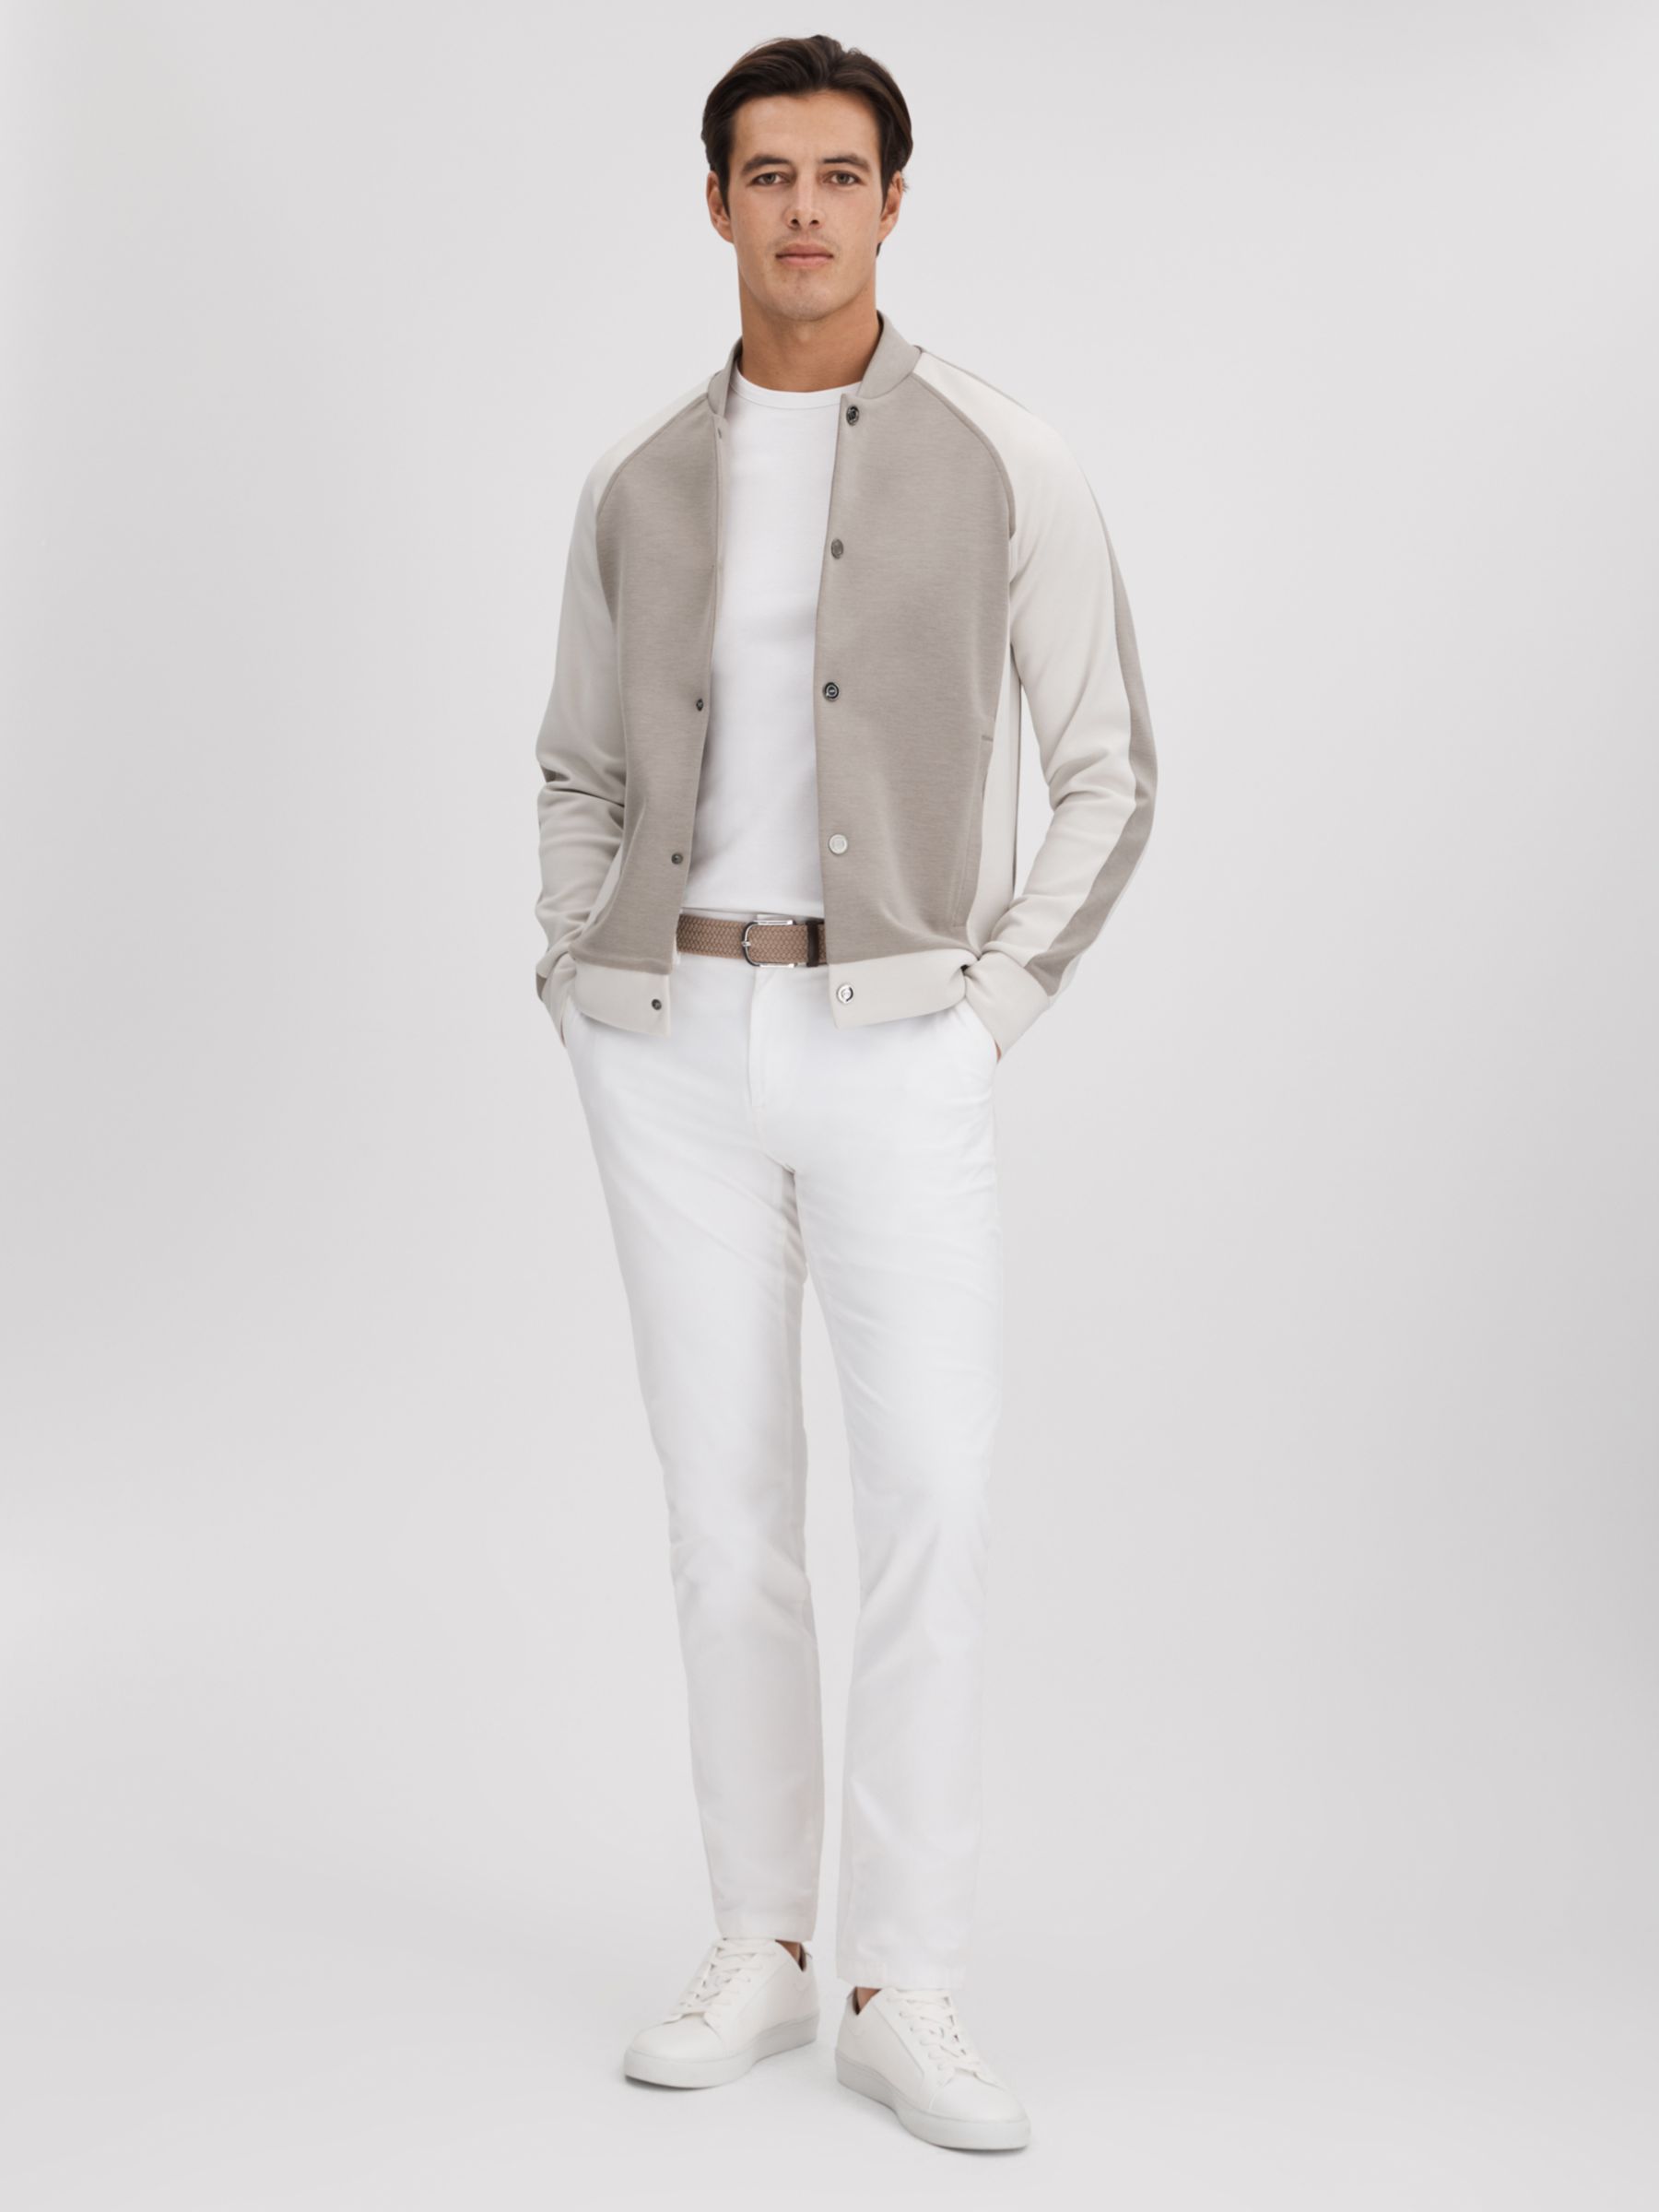 Reiss Pelham Long Sleeve Colour Block Jacket, Taupe/White, XL